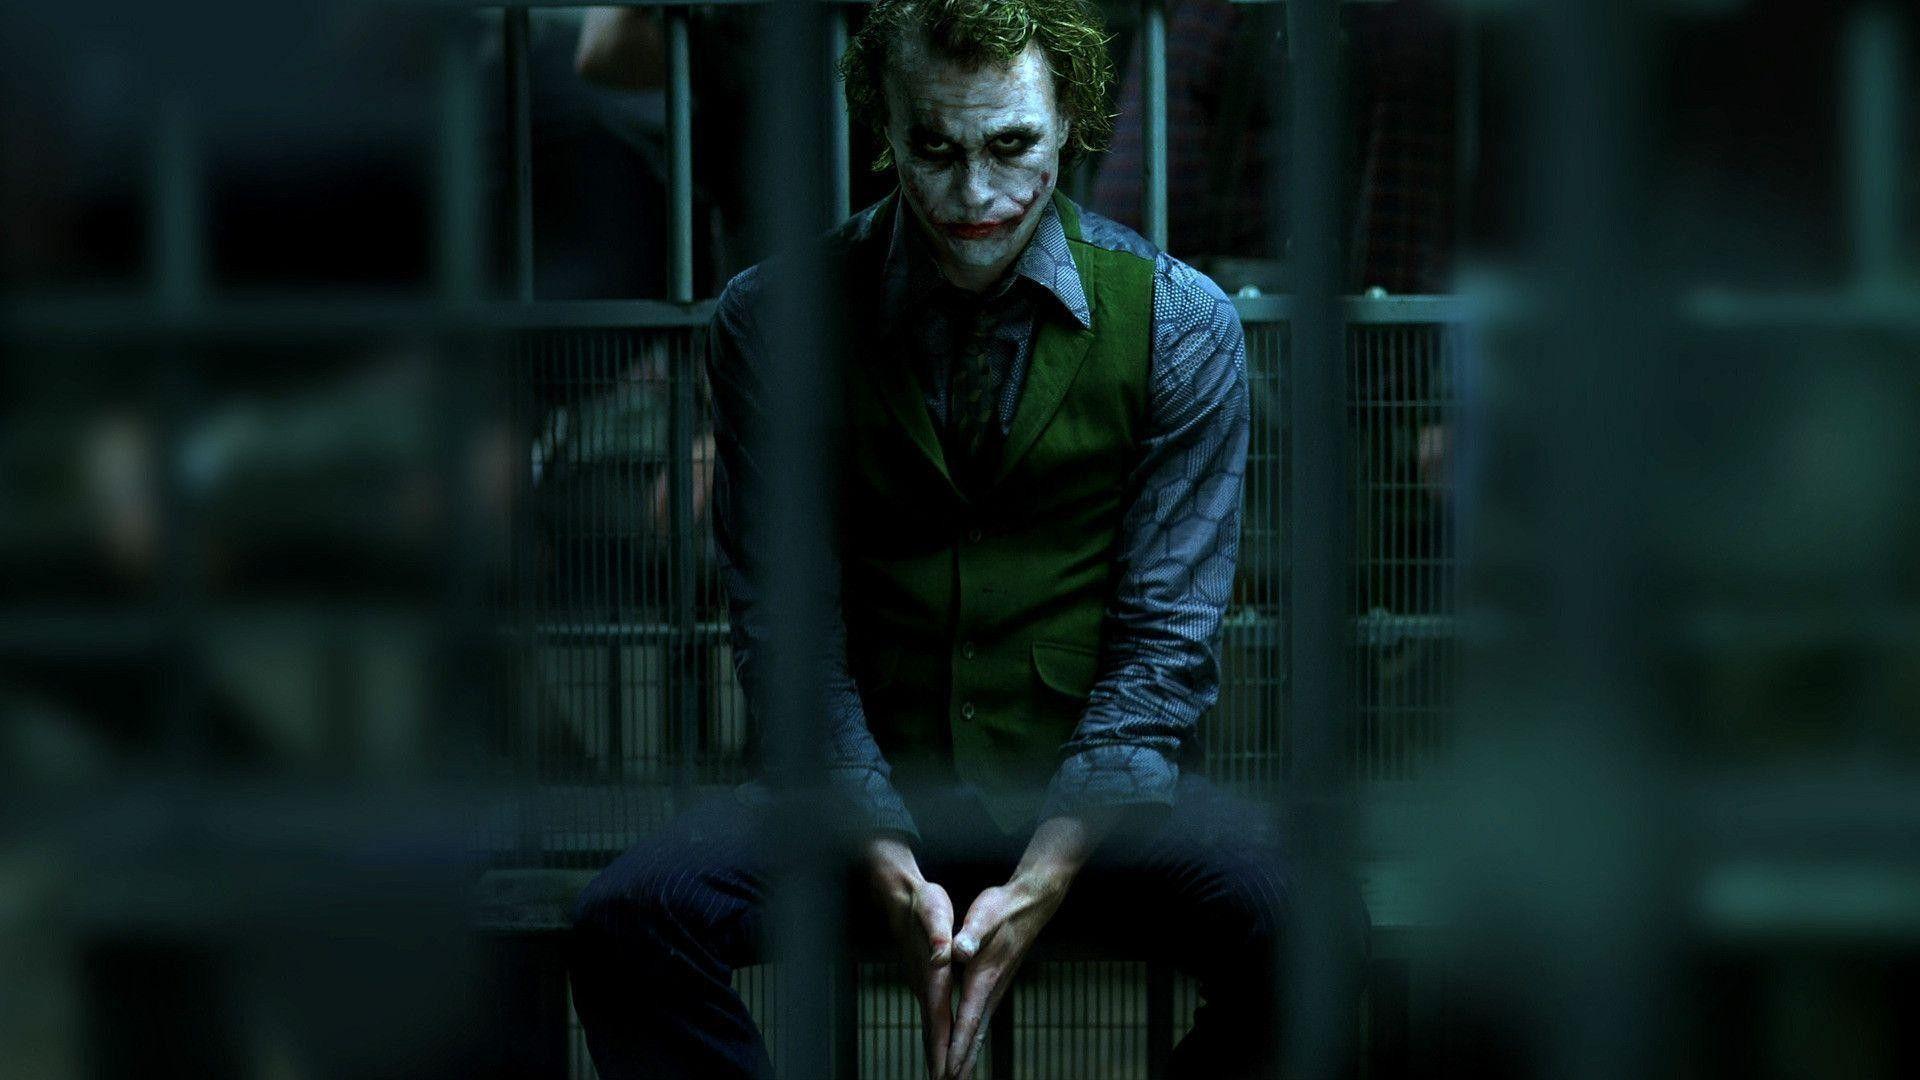 Batman Joker Image Joker 3D Wallpaper Download